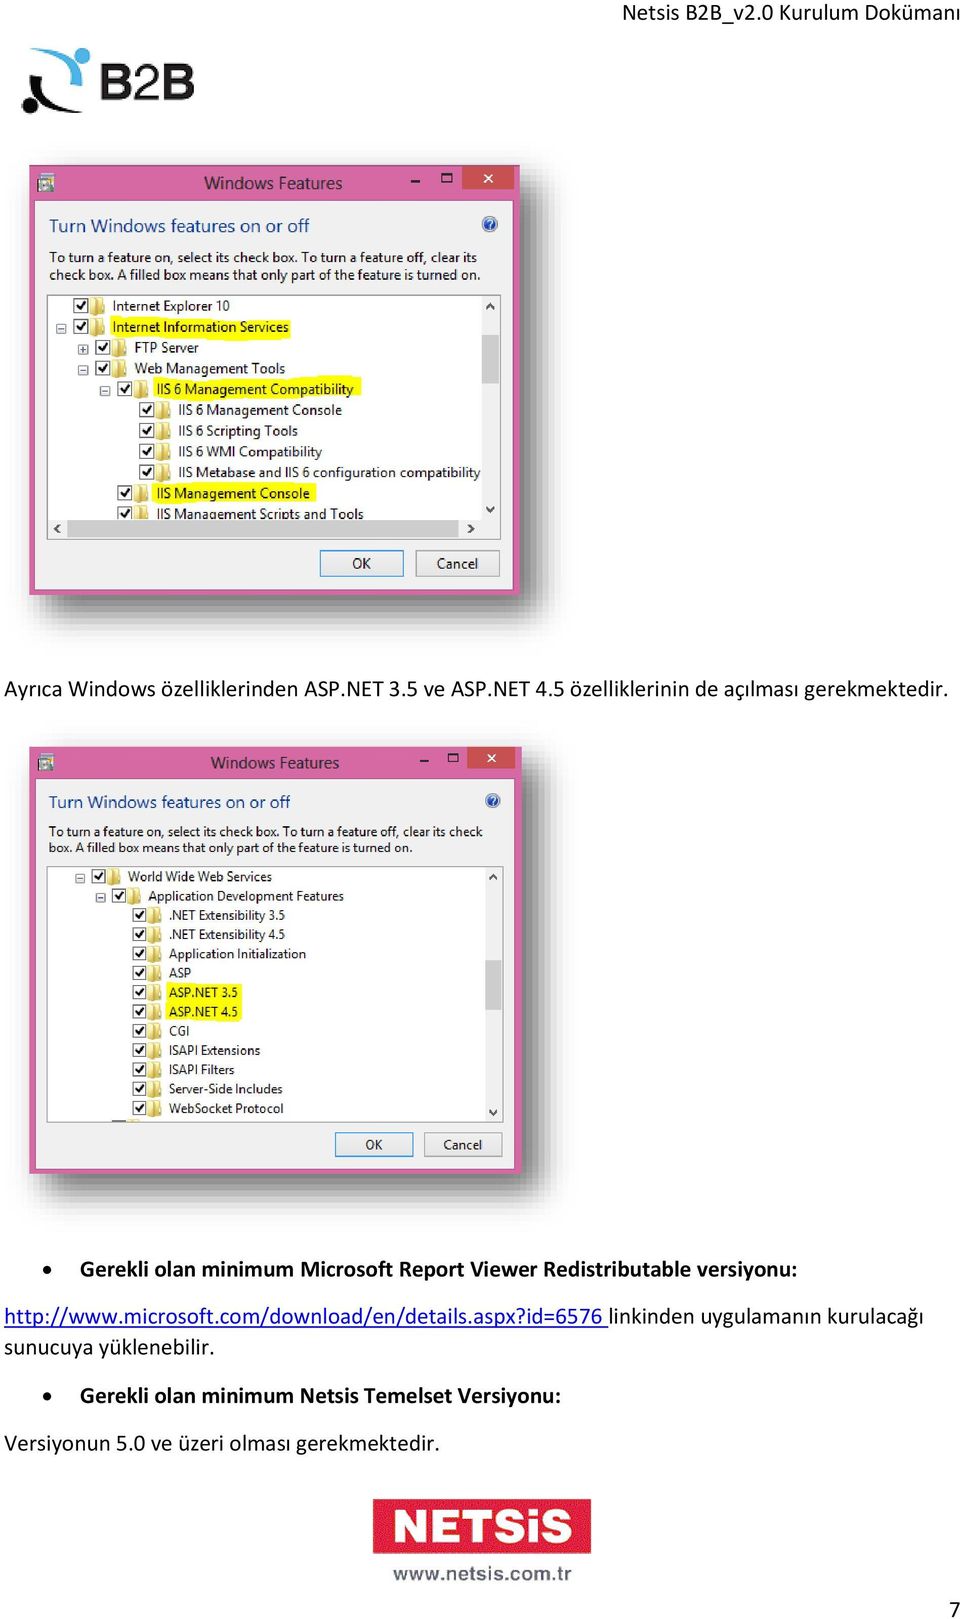 Gerekli olan minimum Microsoft Report Viewer Redistributable versiyonu: http://www.microsoft.